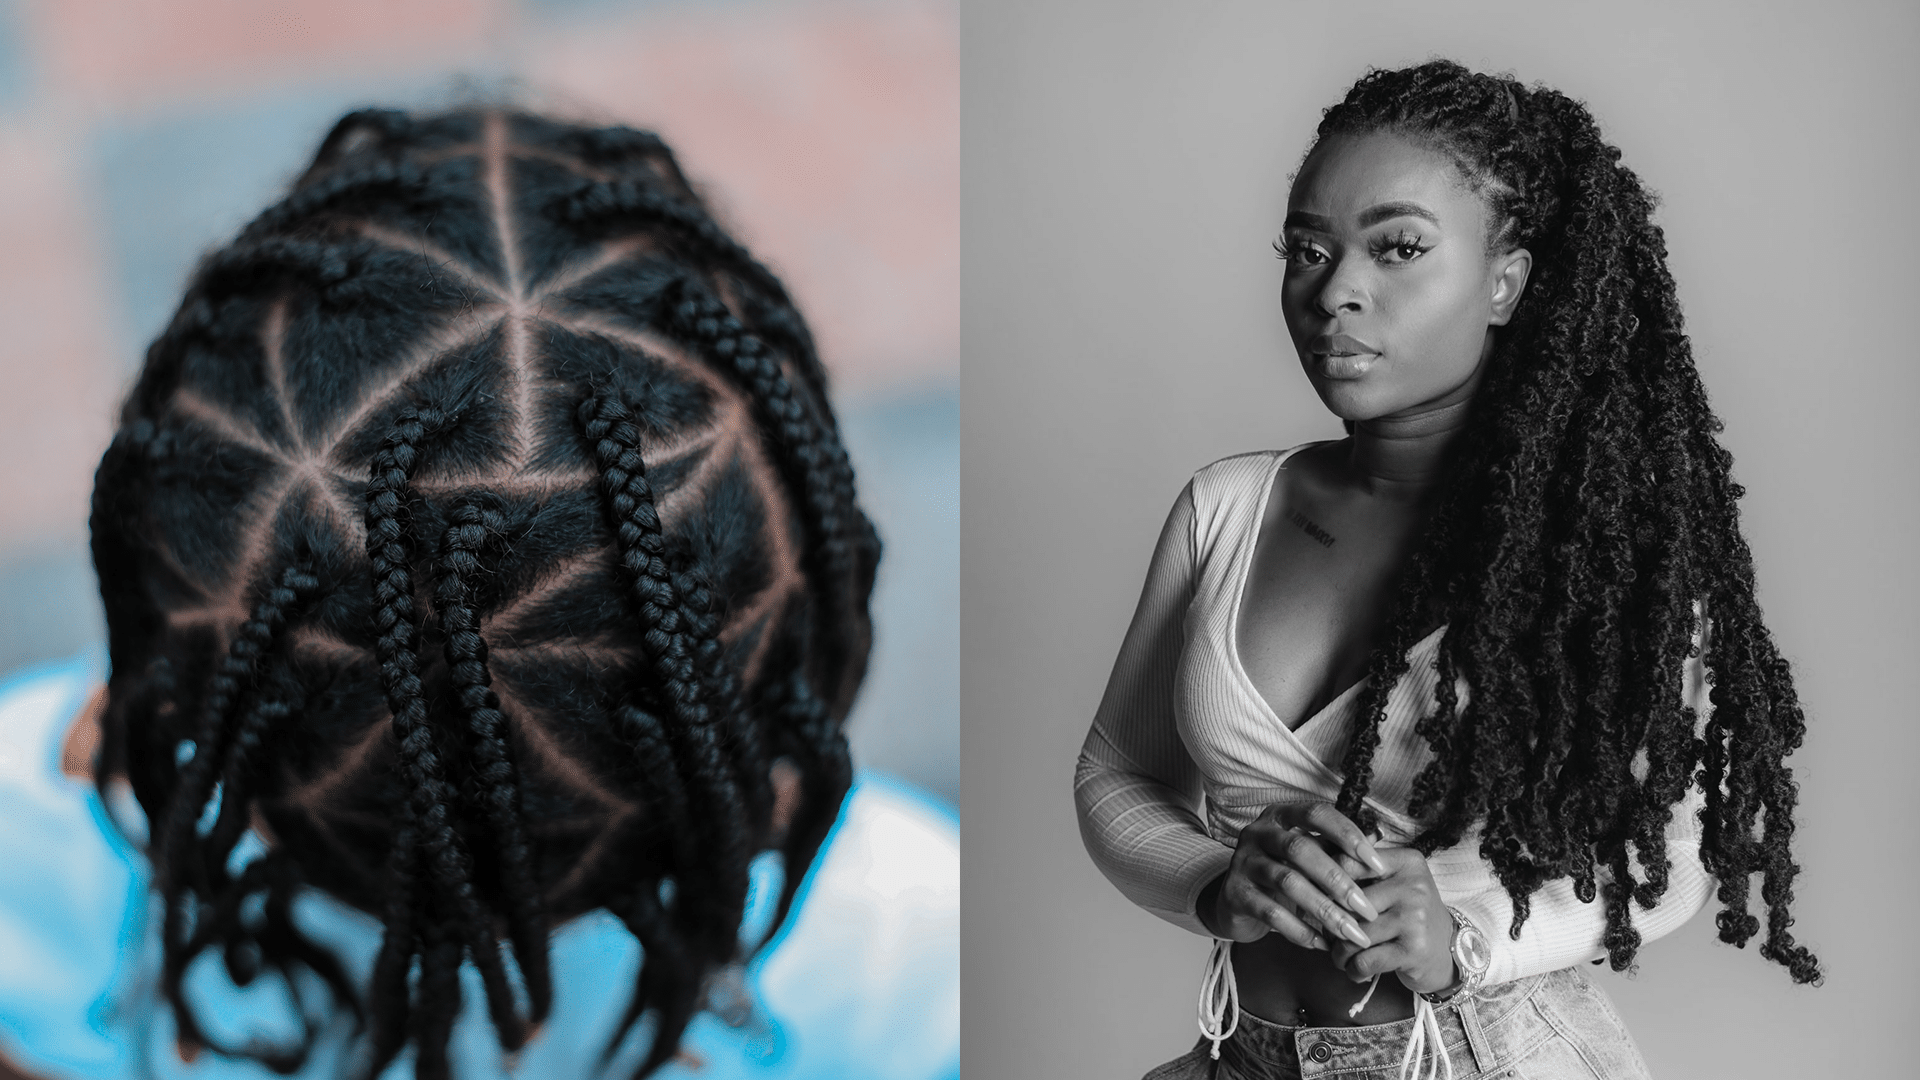 Photos highlighting Black women’s hair